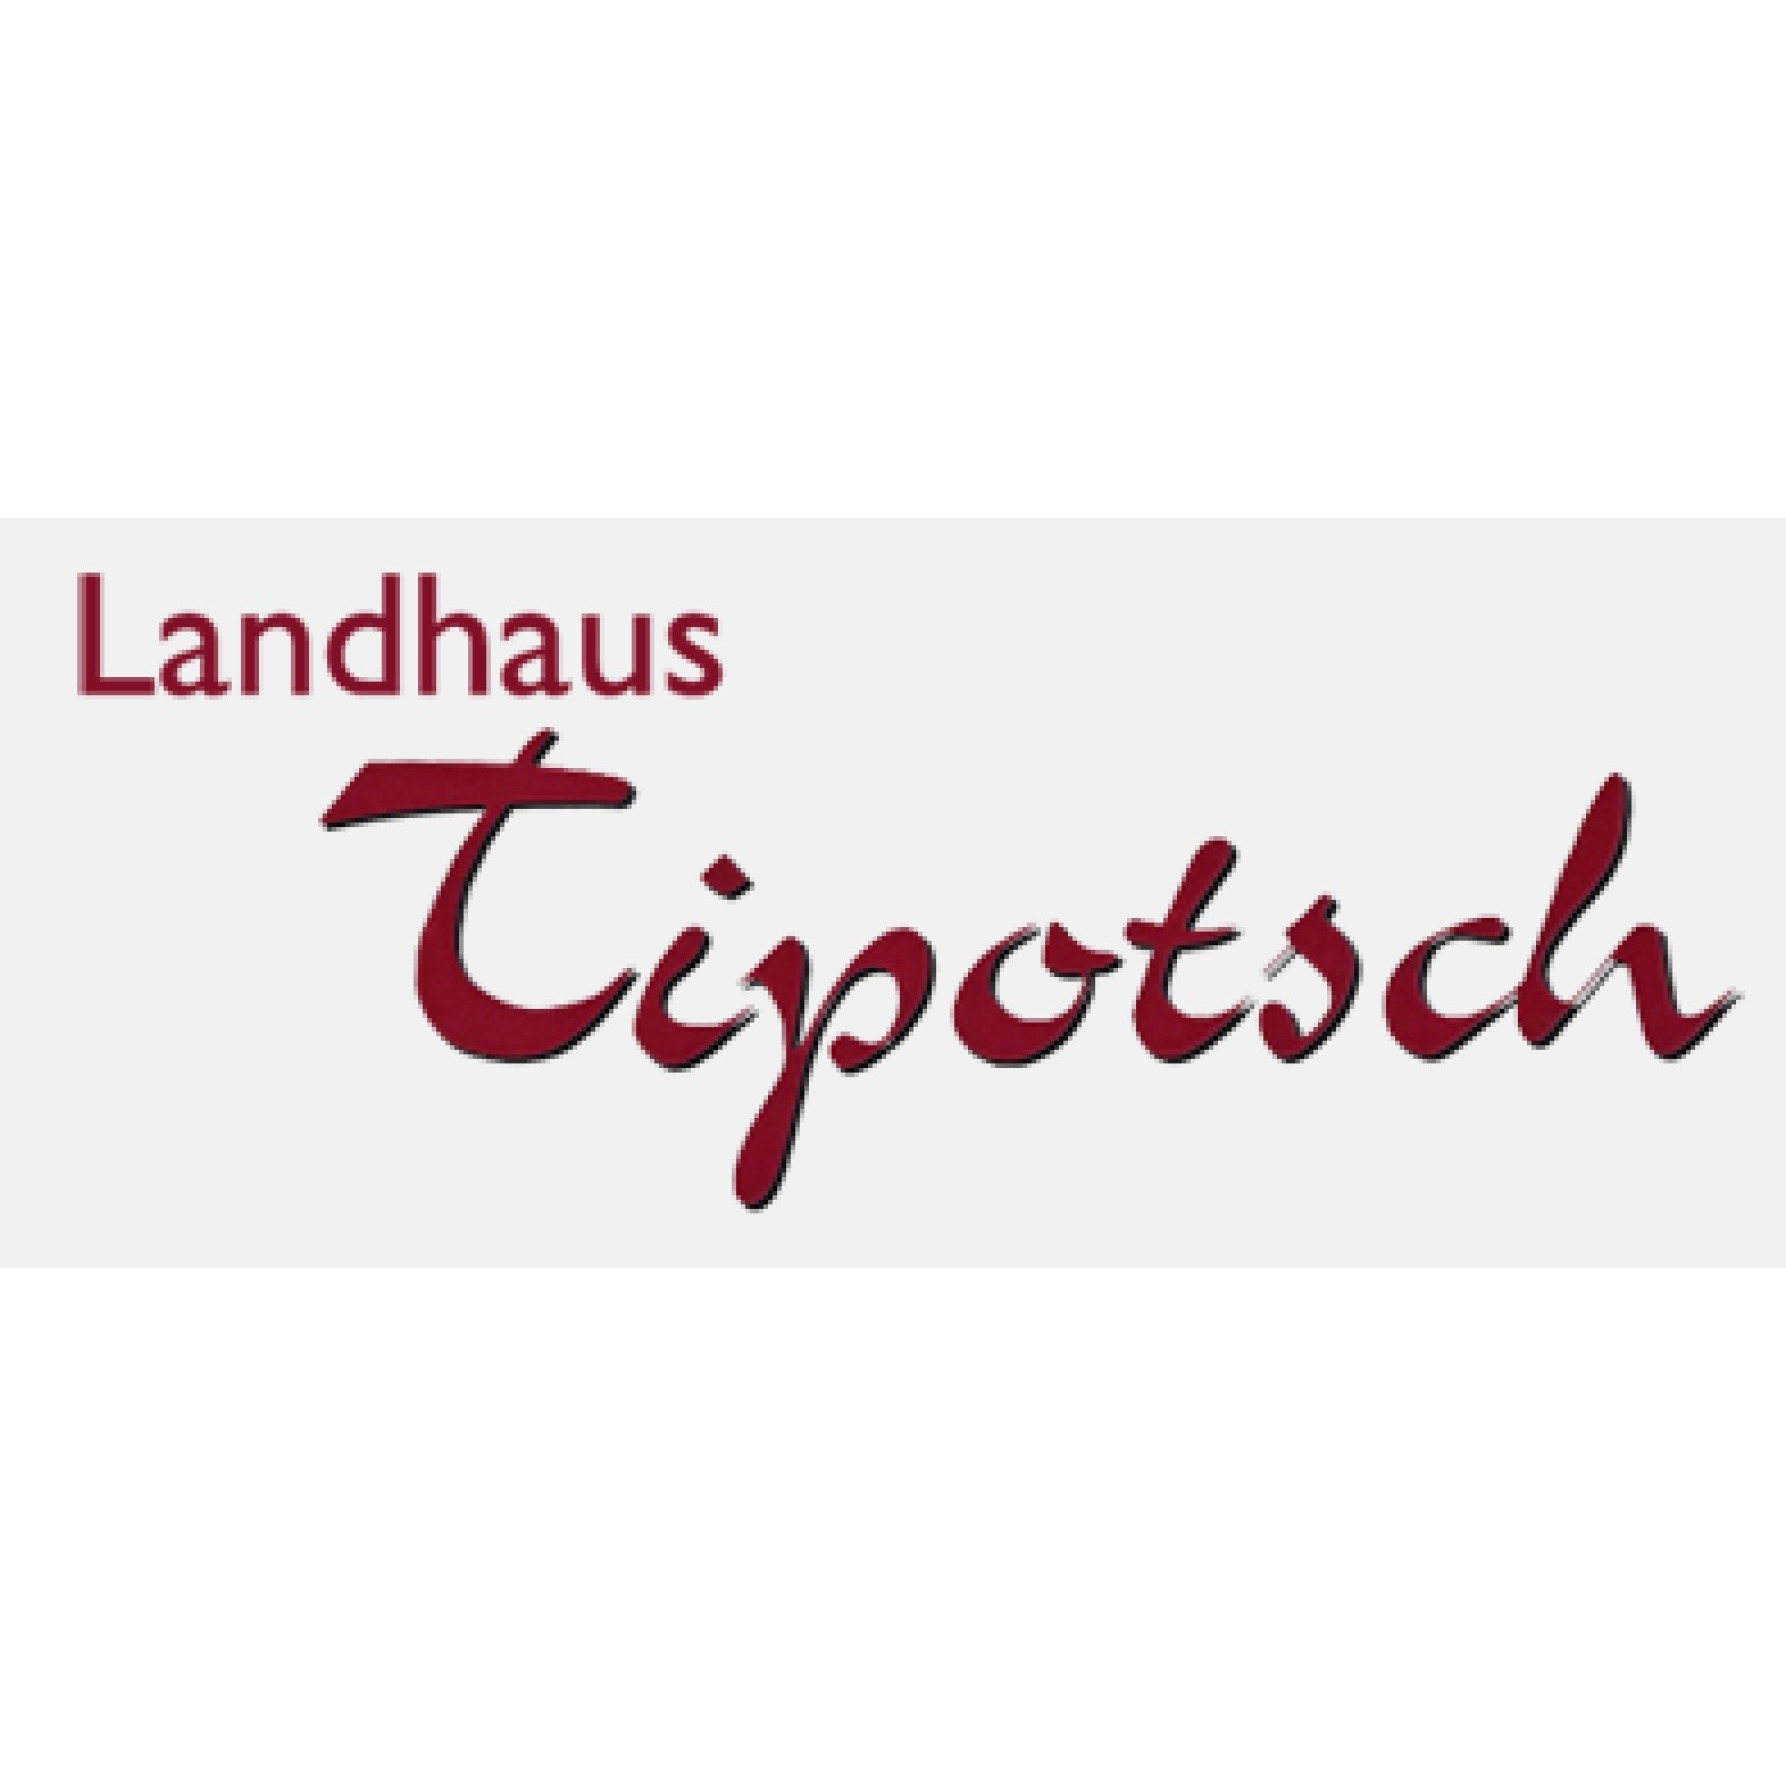 Landhaus Tipotsch - Wolfgang Tipotsch Logo